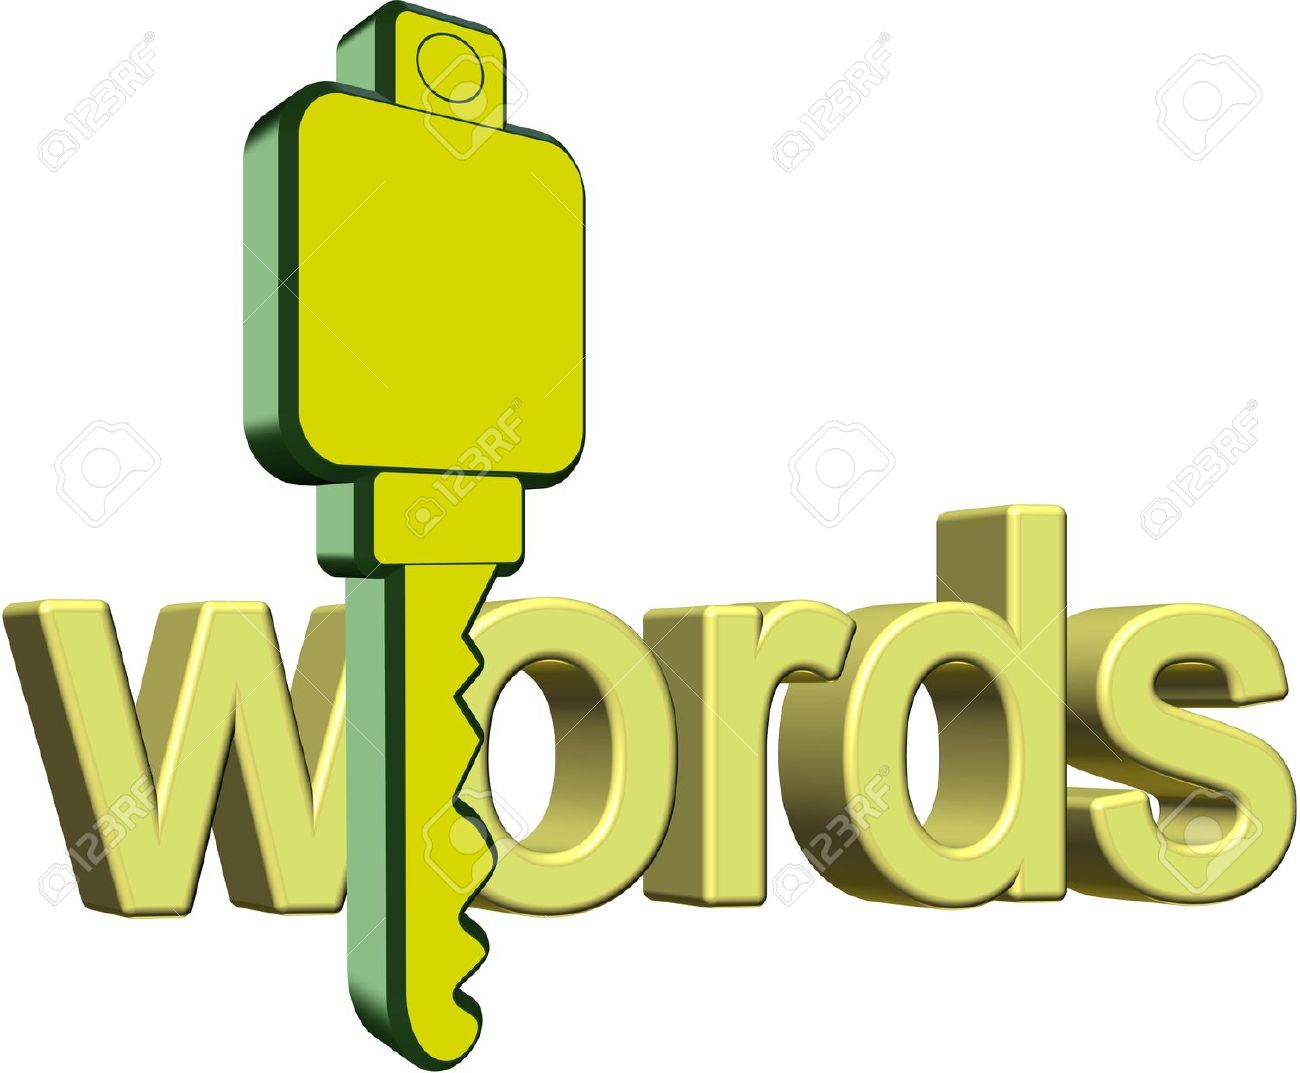 key clipart key word key key word